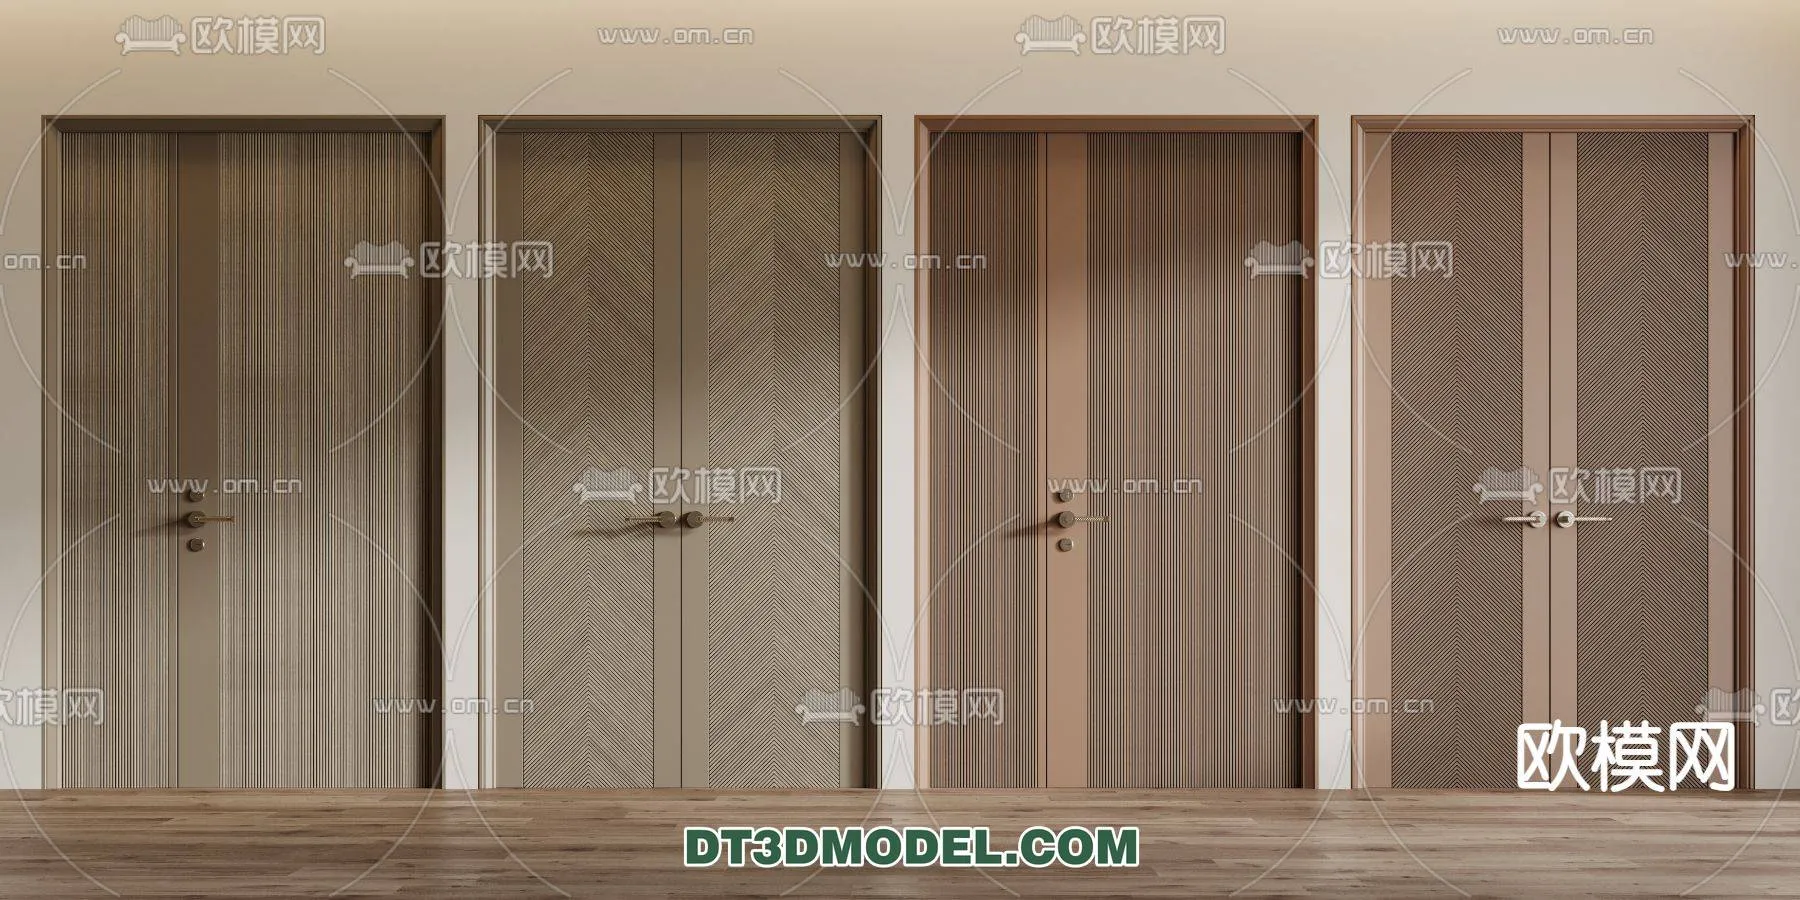 WABI SABI STYLE 3D MODELS – DOORS – 0003